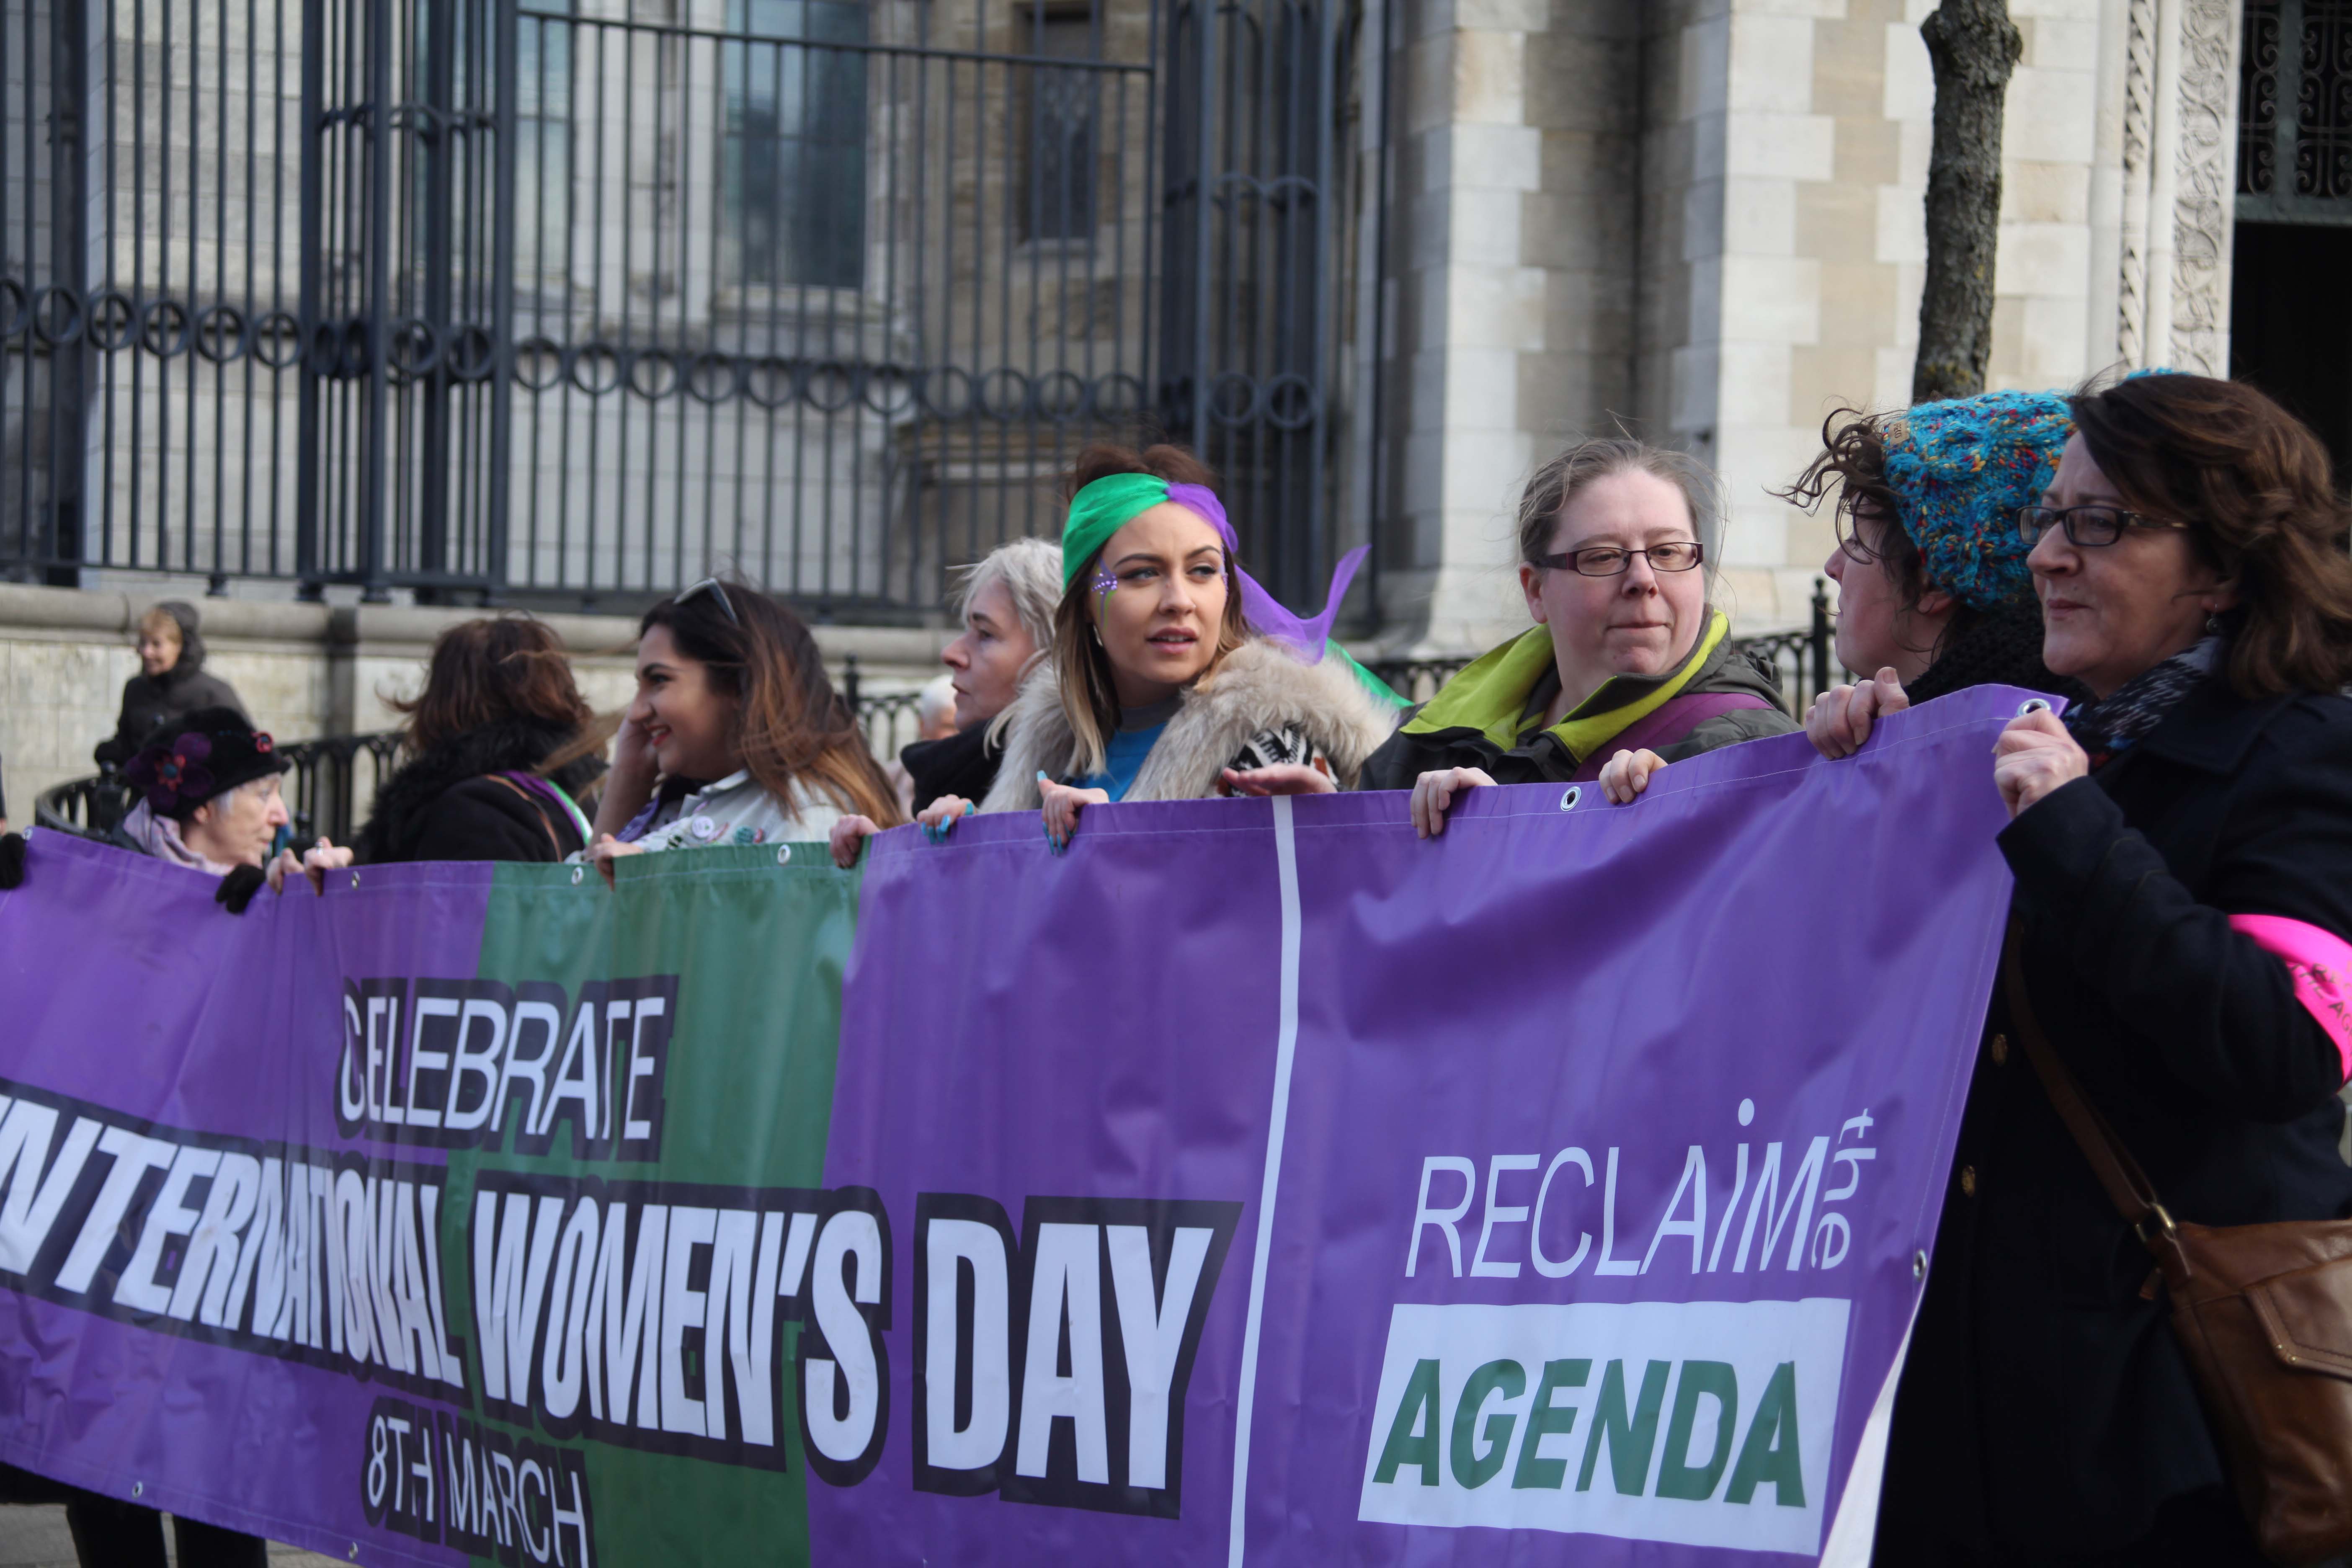 Belfast celebrates International Women’s Day